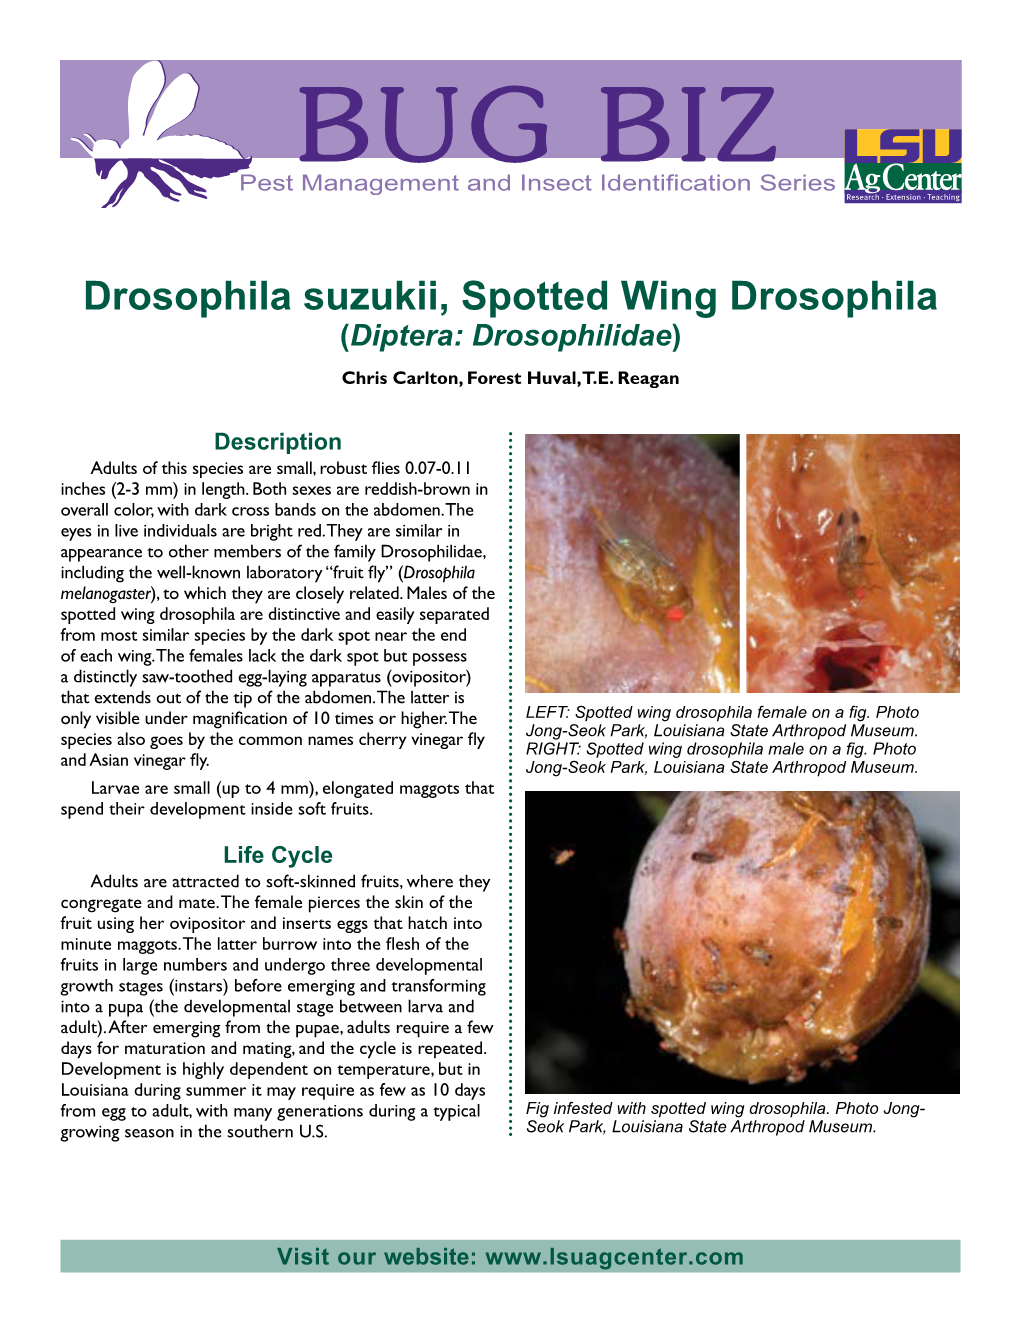 Drosophila Suzukii, Spotted Wing Drosophila (Diptera: Drosophilidae) Chris Carlton, Forest Huval, T.E